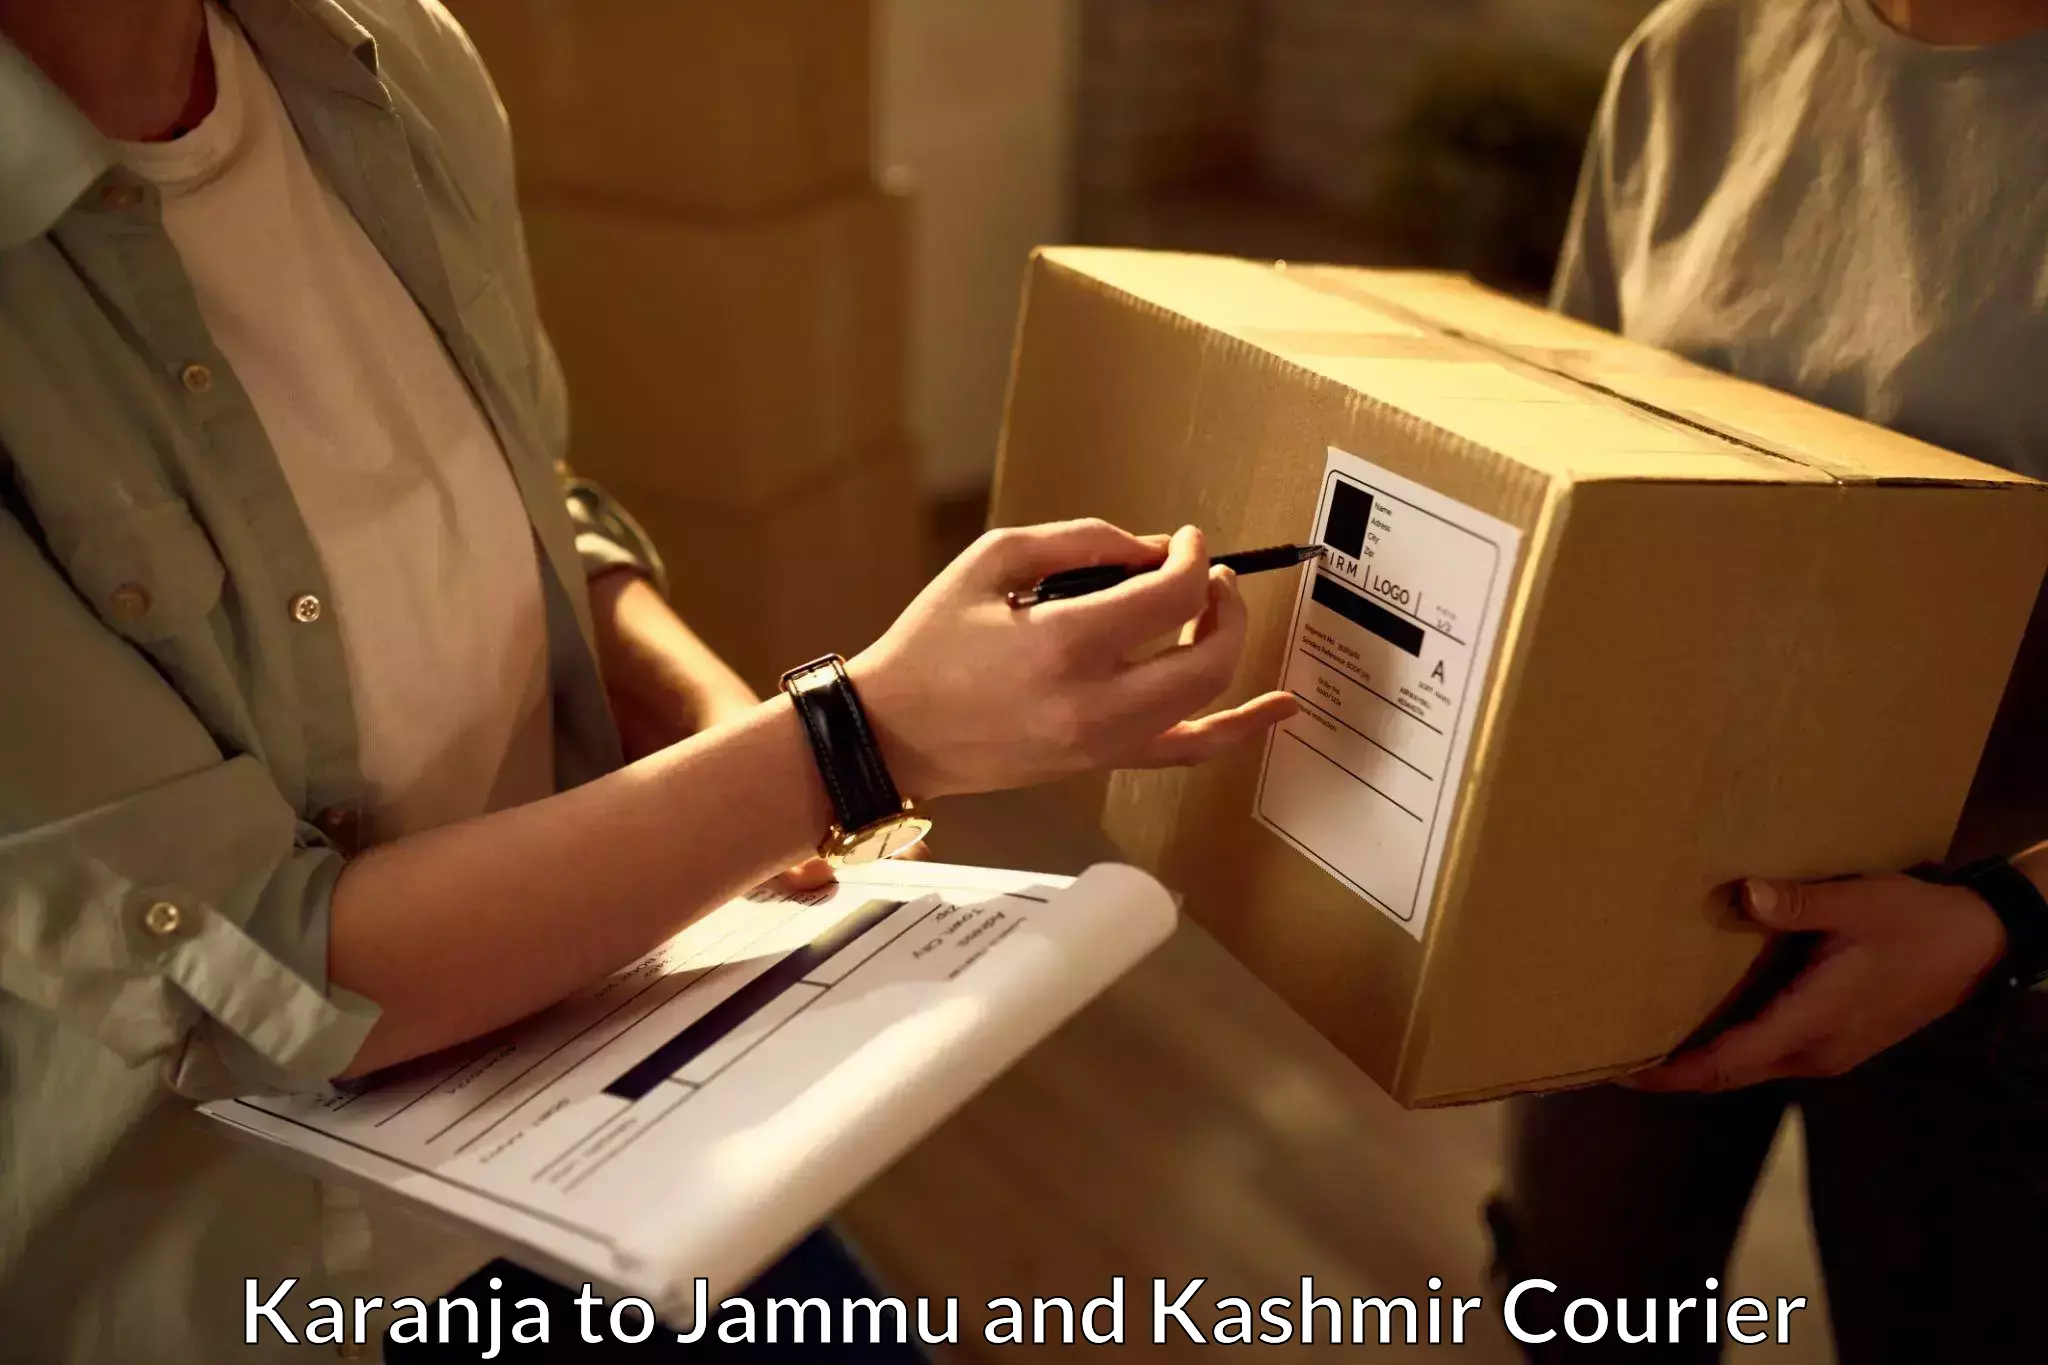 Reliable delivery network Karanja to Katra